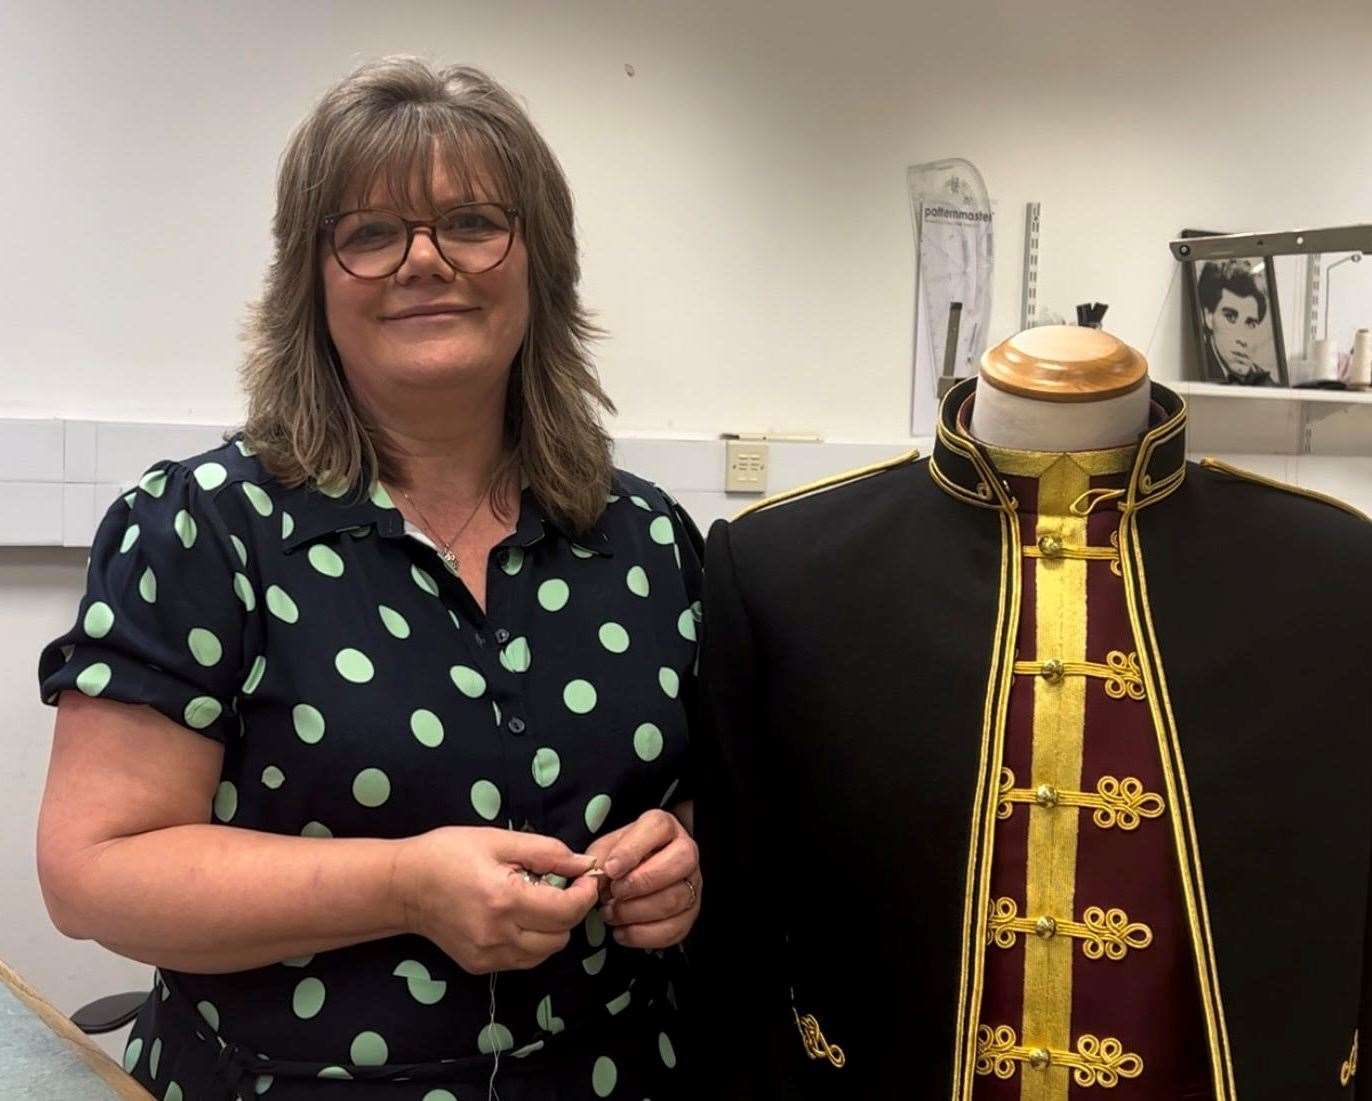 Sarah Wilkinson is a bespoke tailor celebrating 40 years at Savile Row